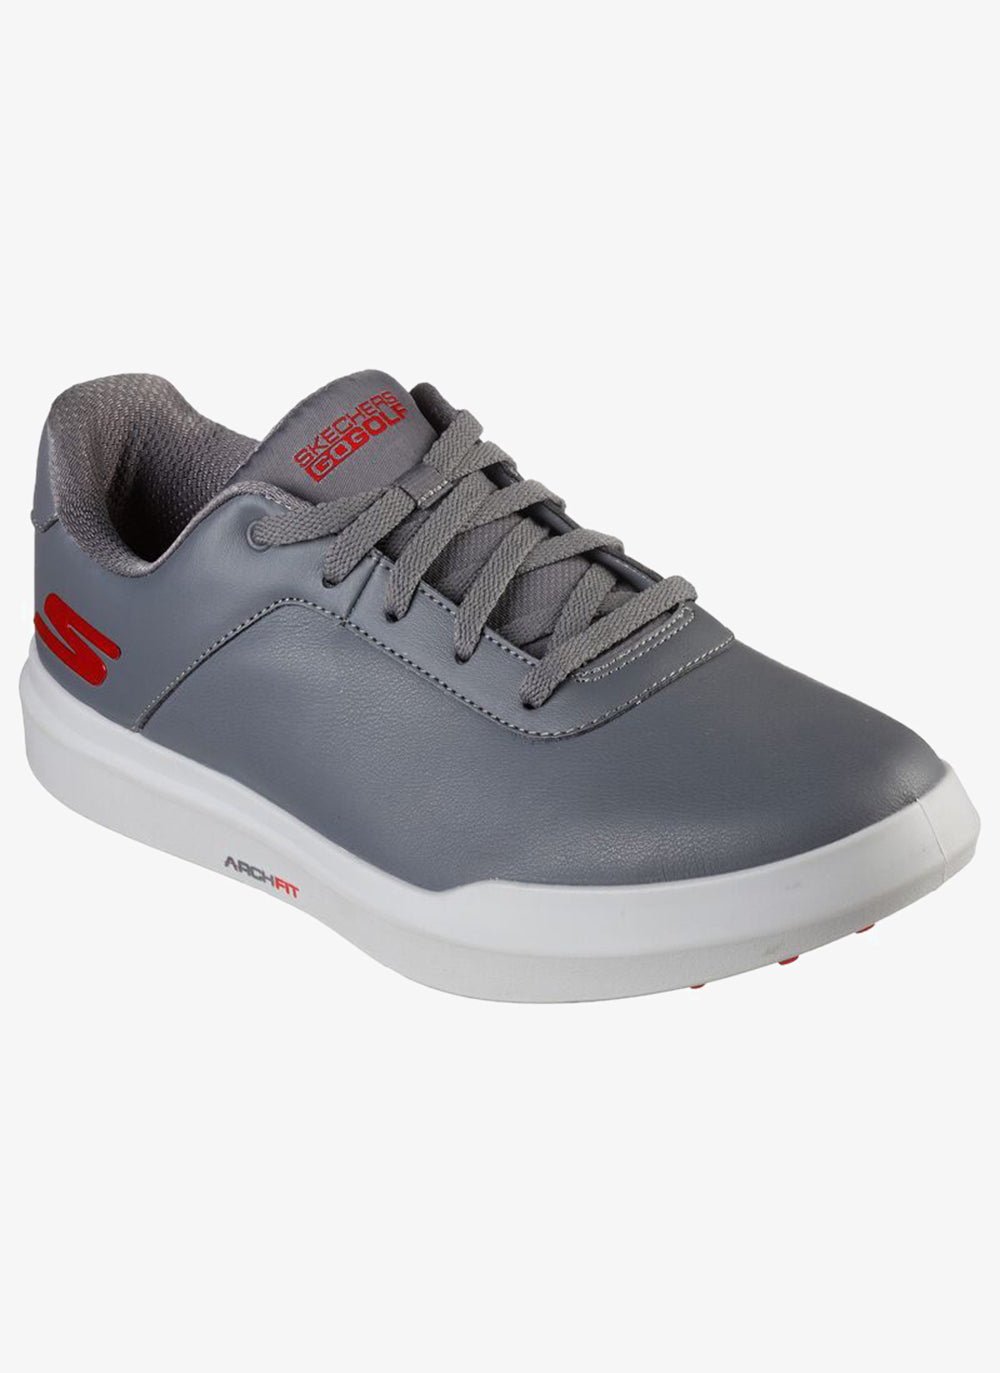 Skechers Go Golf Drive 5 Golf Shoes 214037